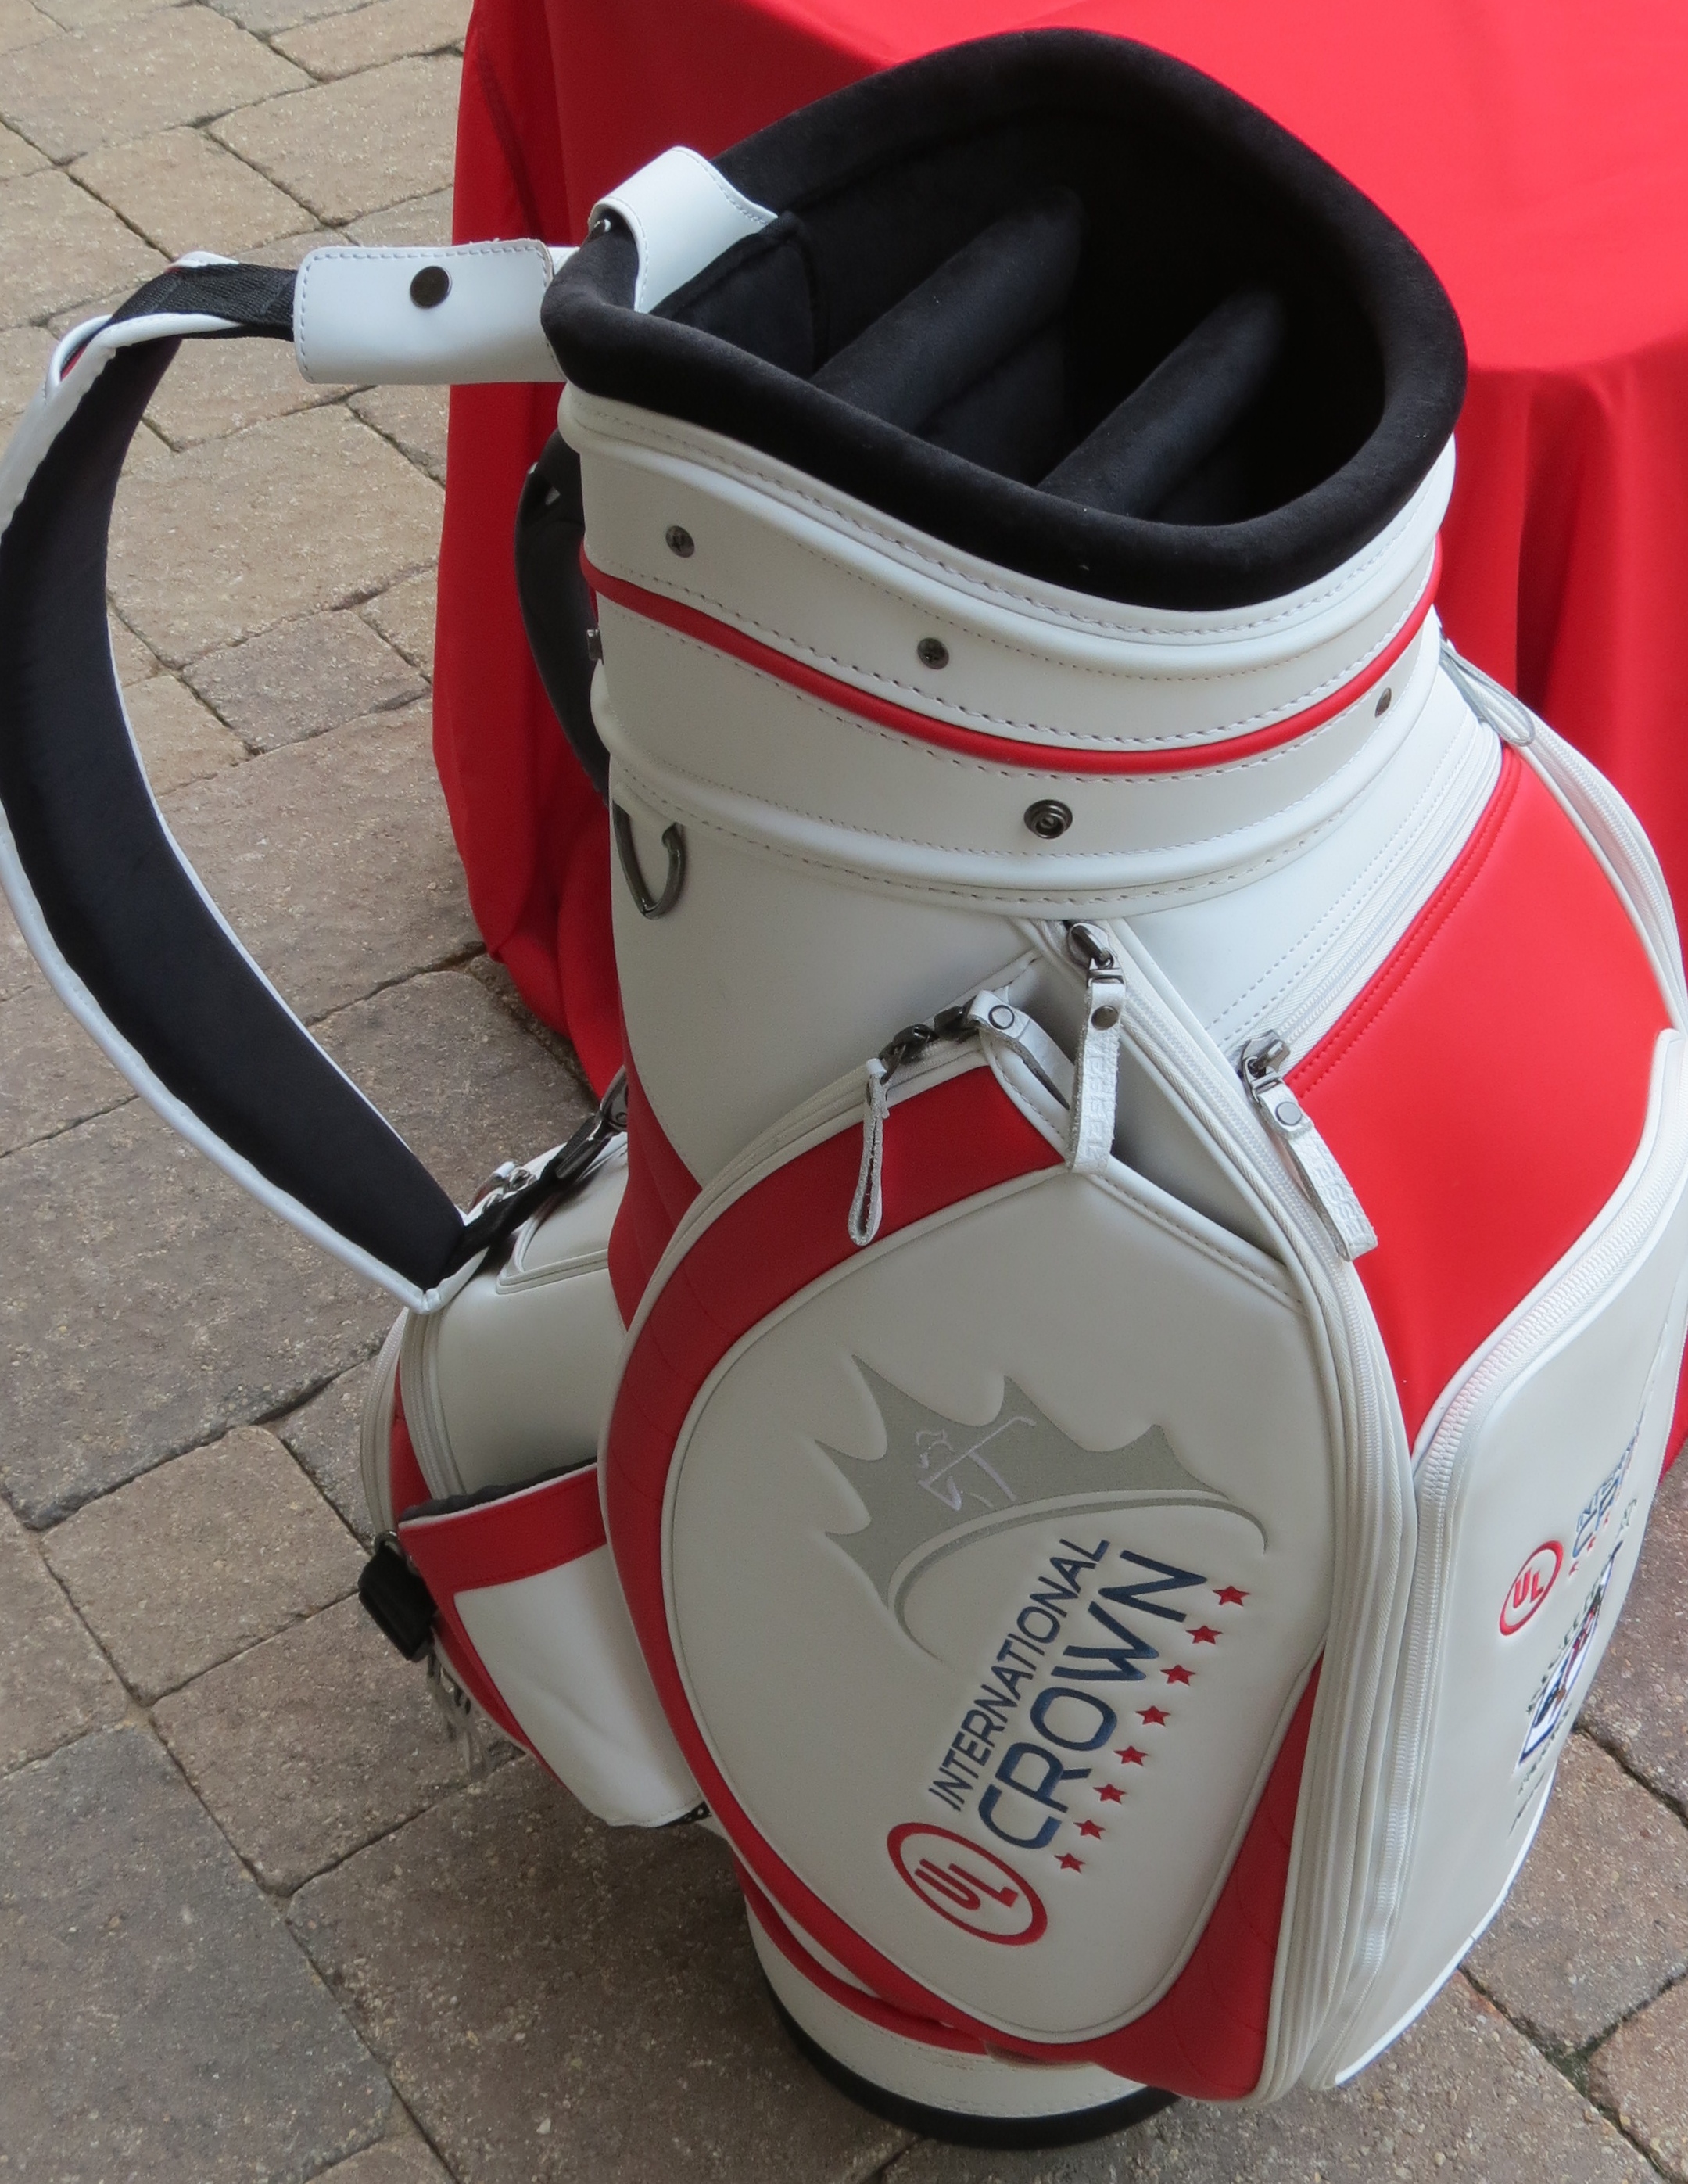 UL International Crown golf bag